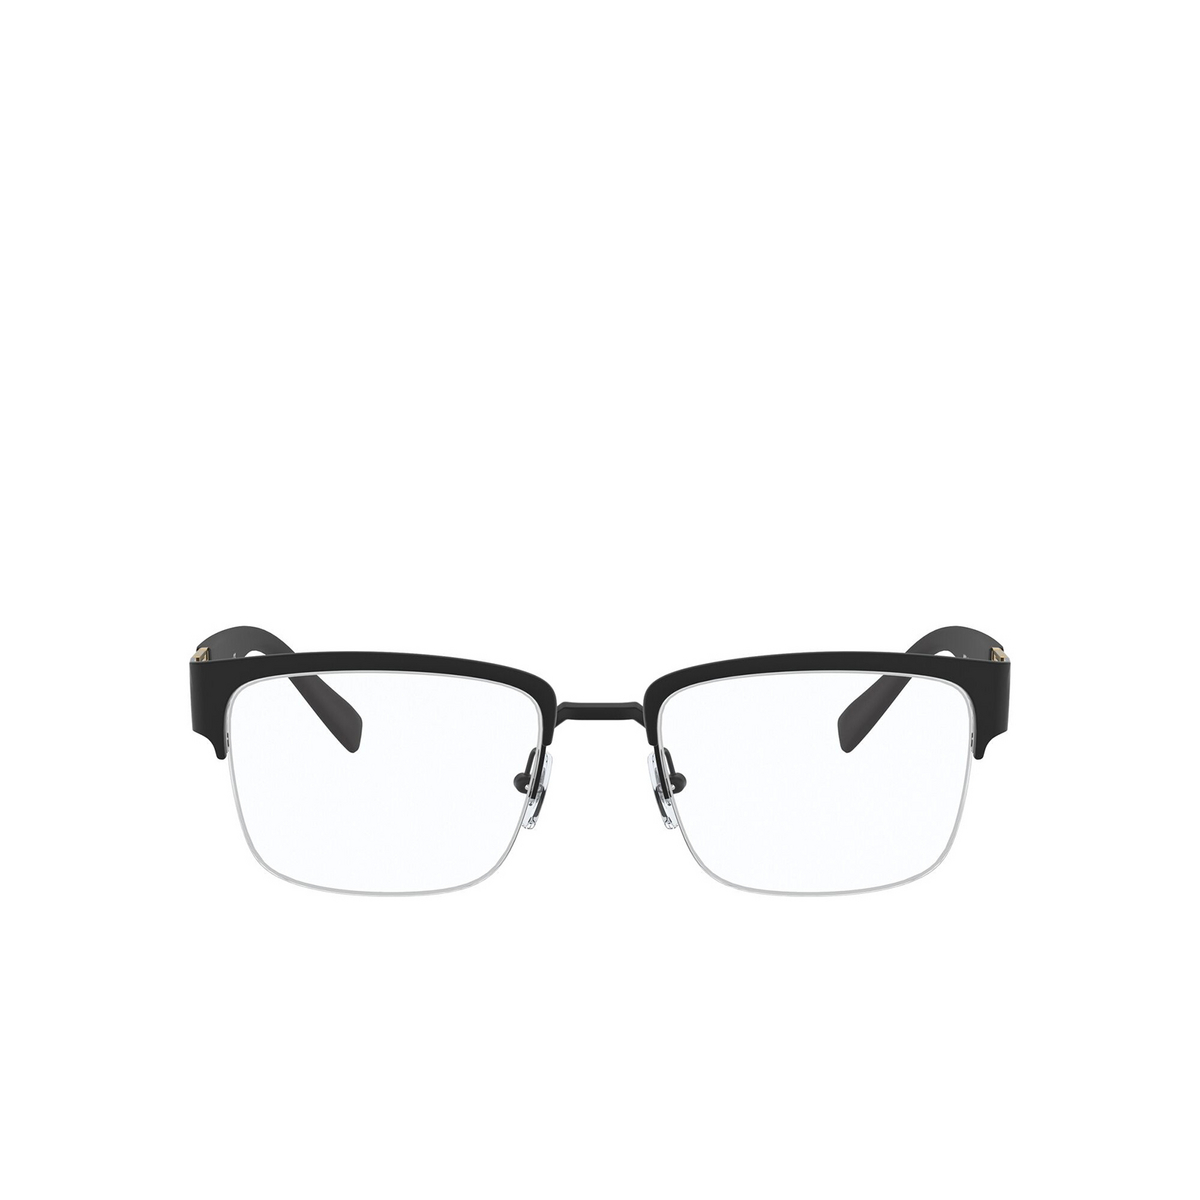 Versace® Rectangle Eyeglasses: VE1272 color Matte Black 1261 - front view.